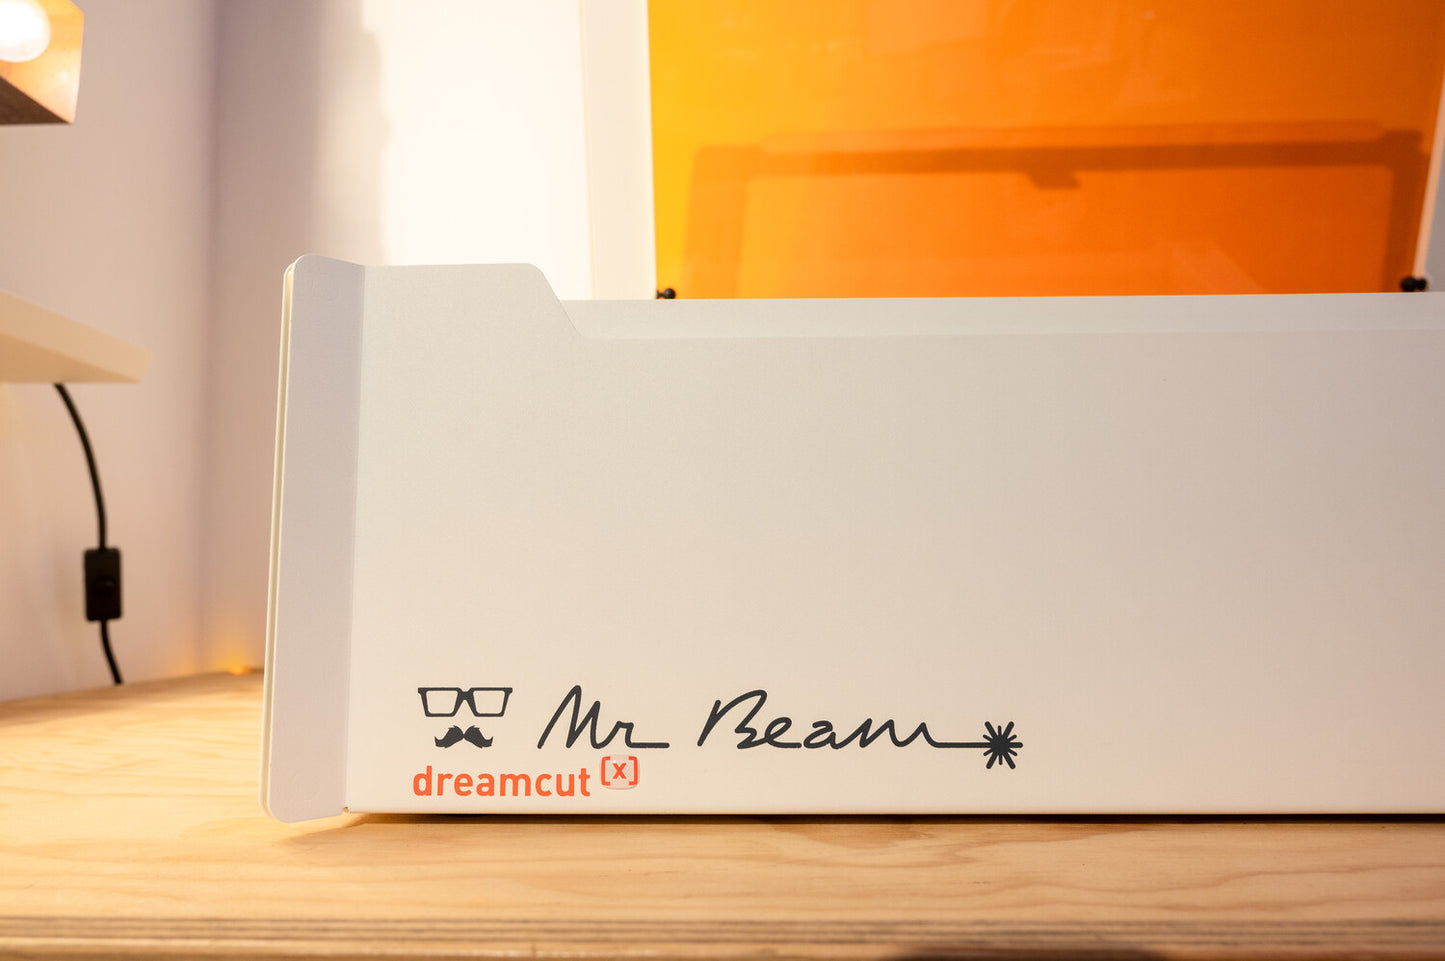 Mr Beam II dreamcut [x] - Starter Pack Bundle